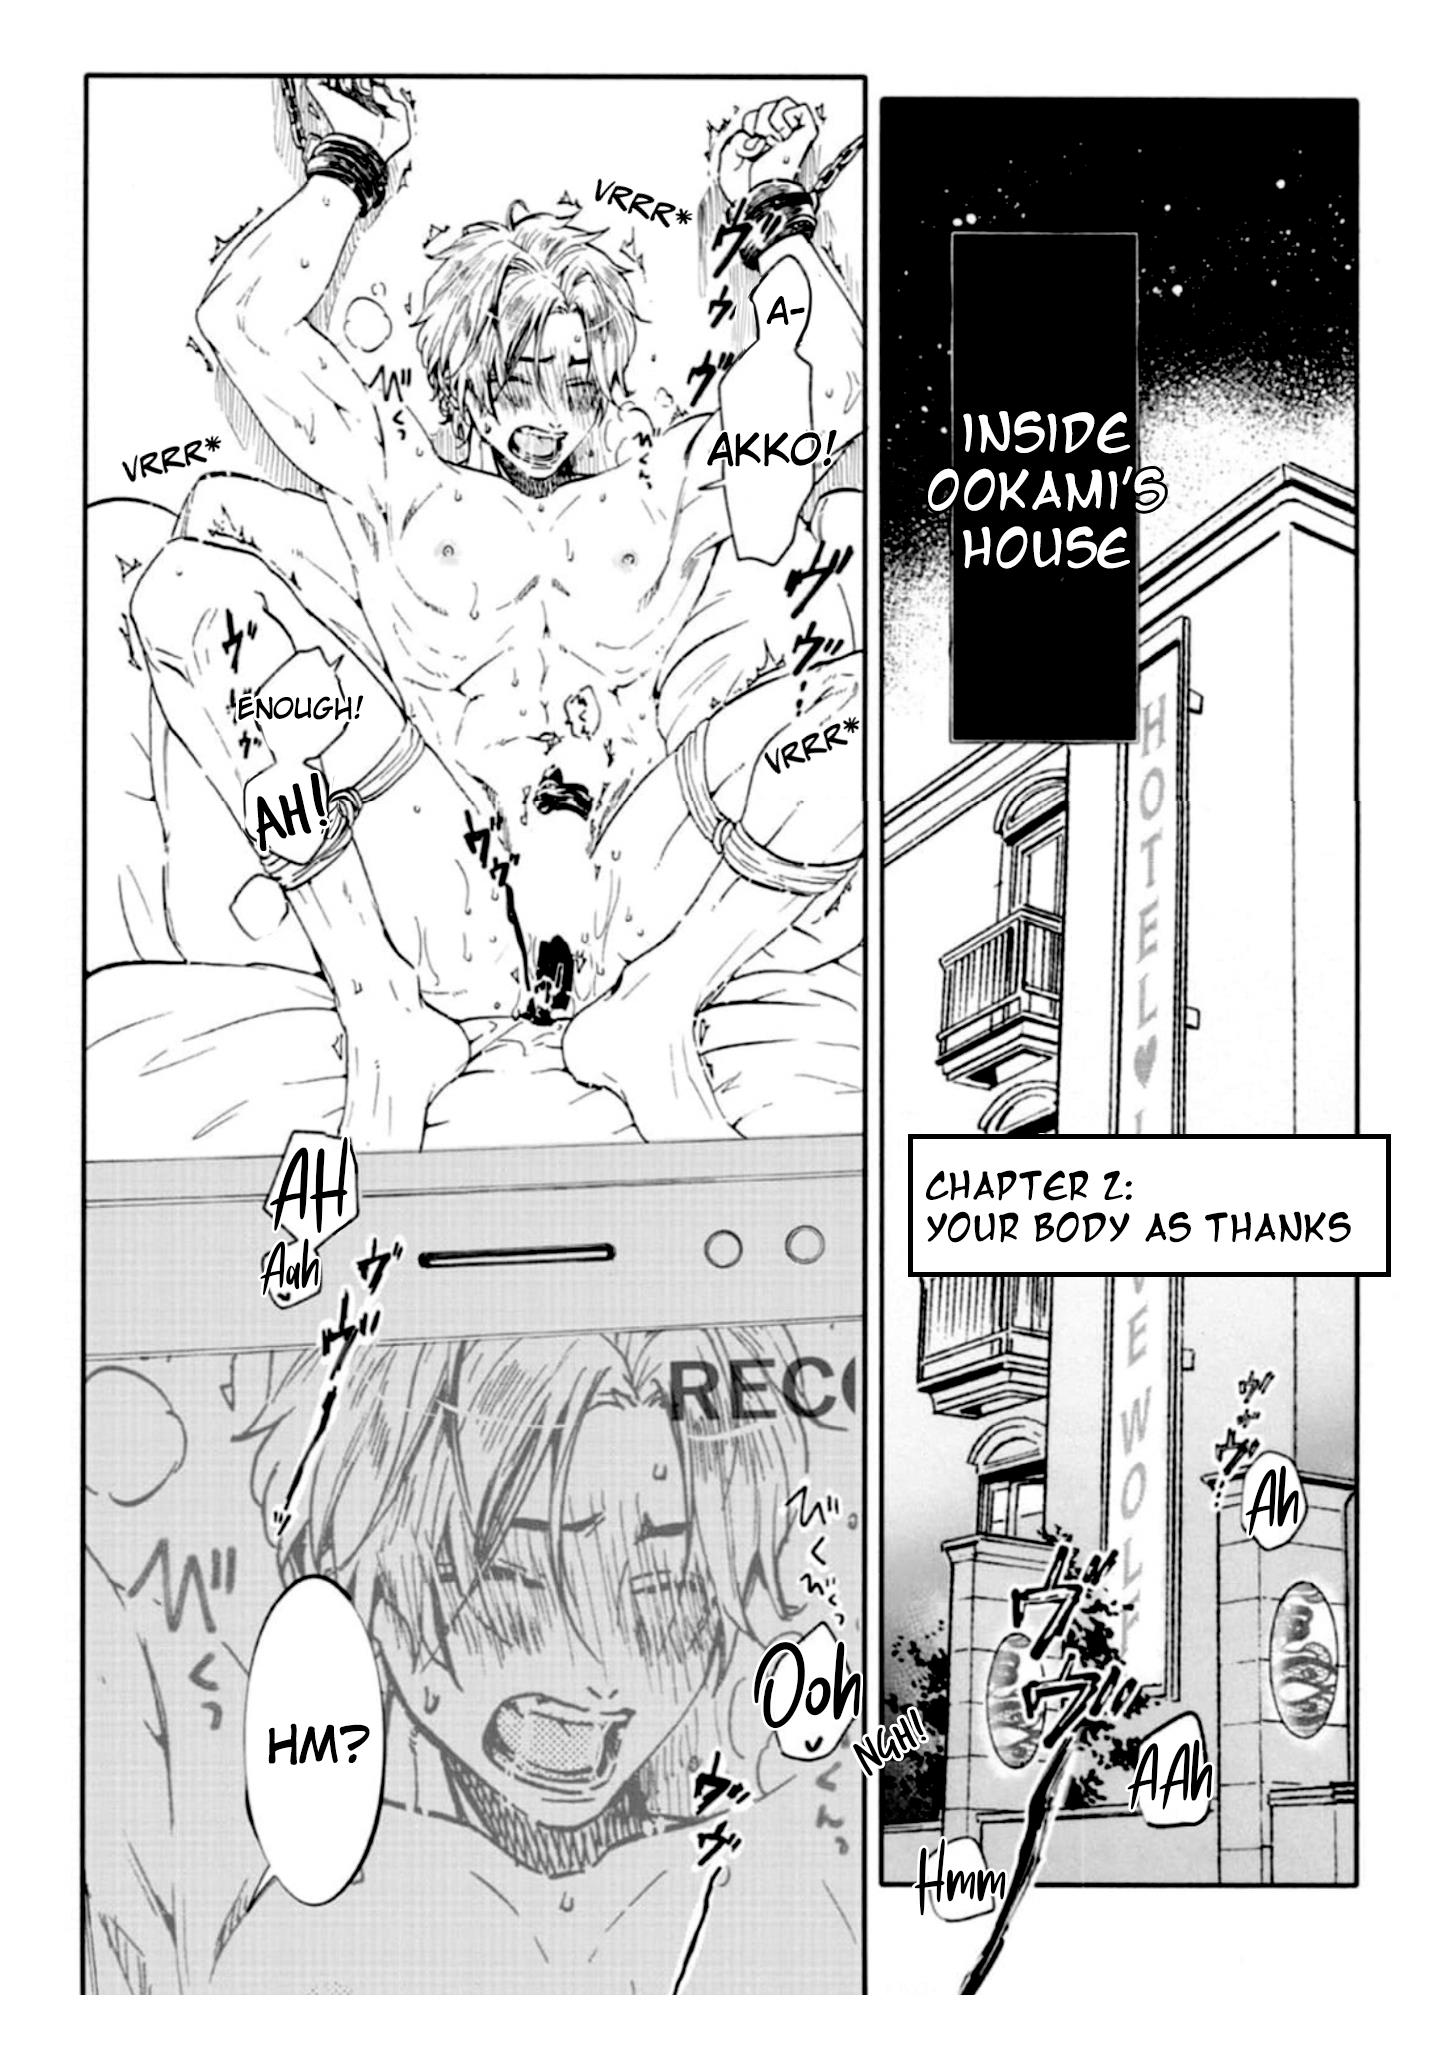 Oukami Α-San To Oukami Ω-Kun - Page 1